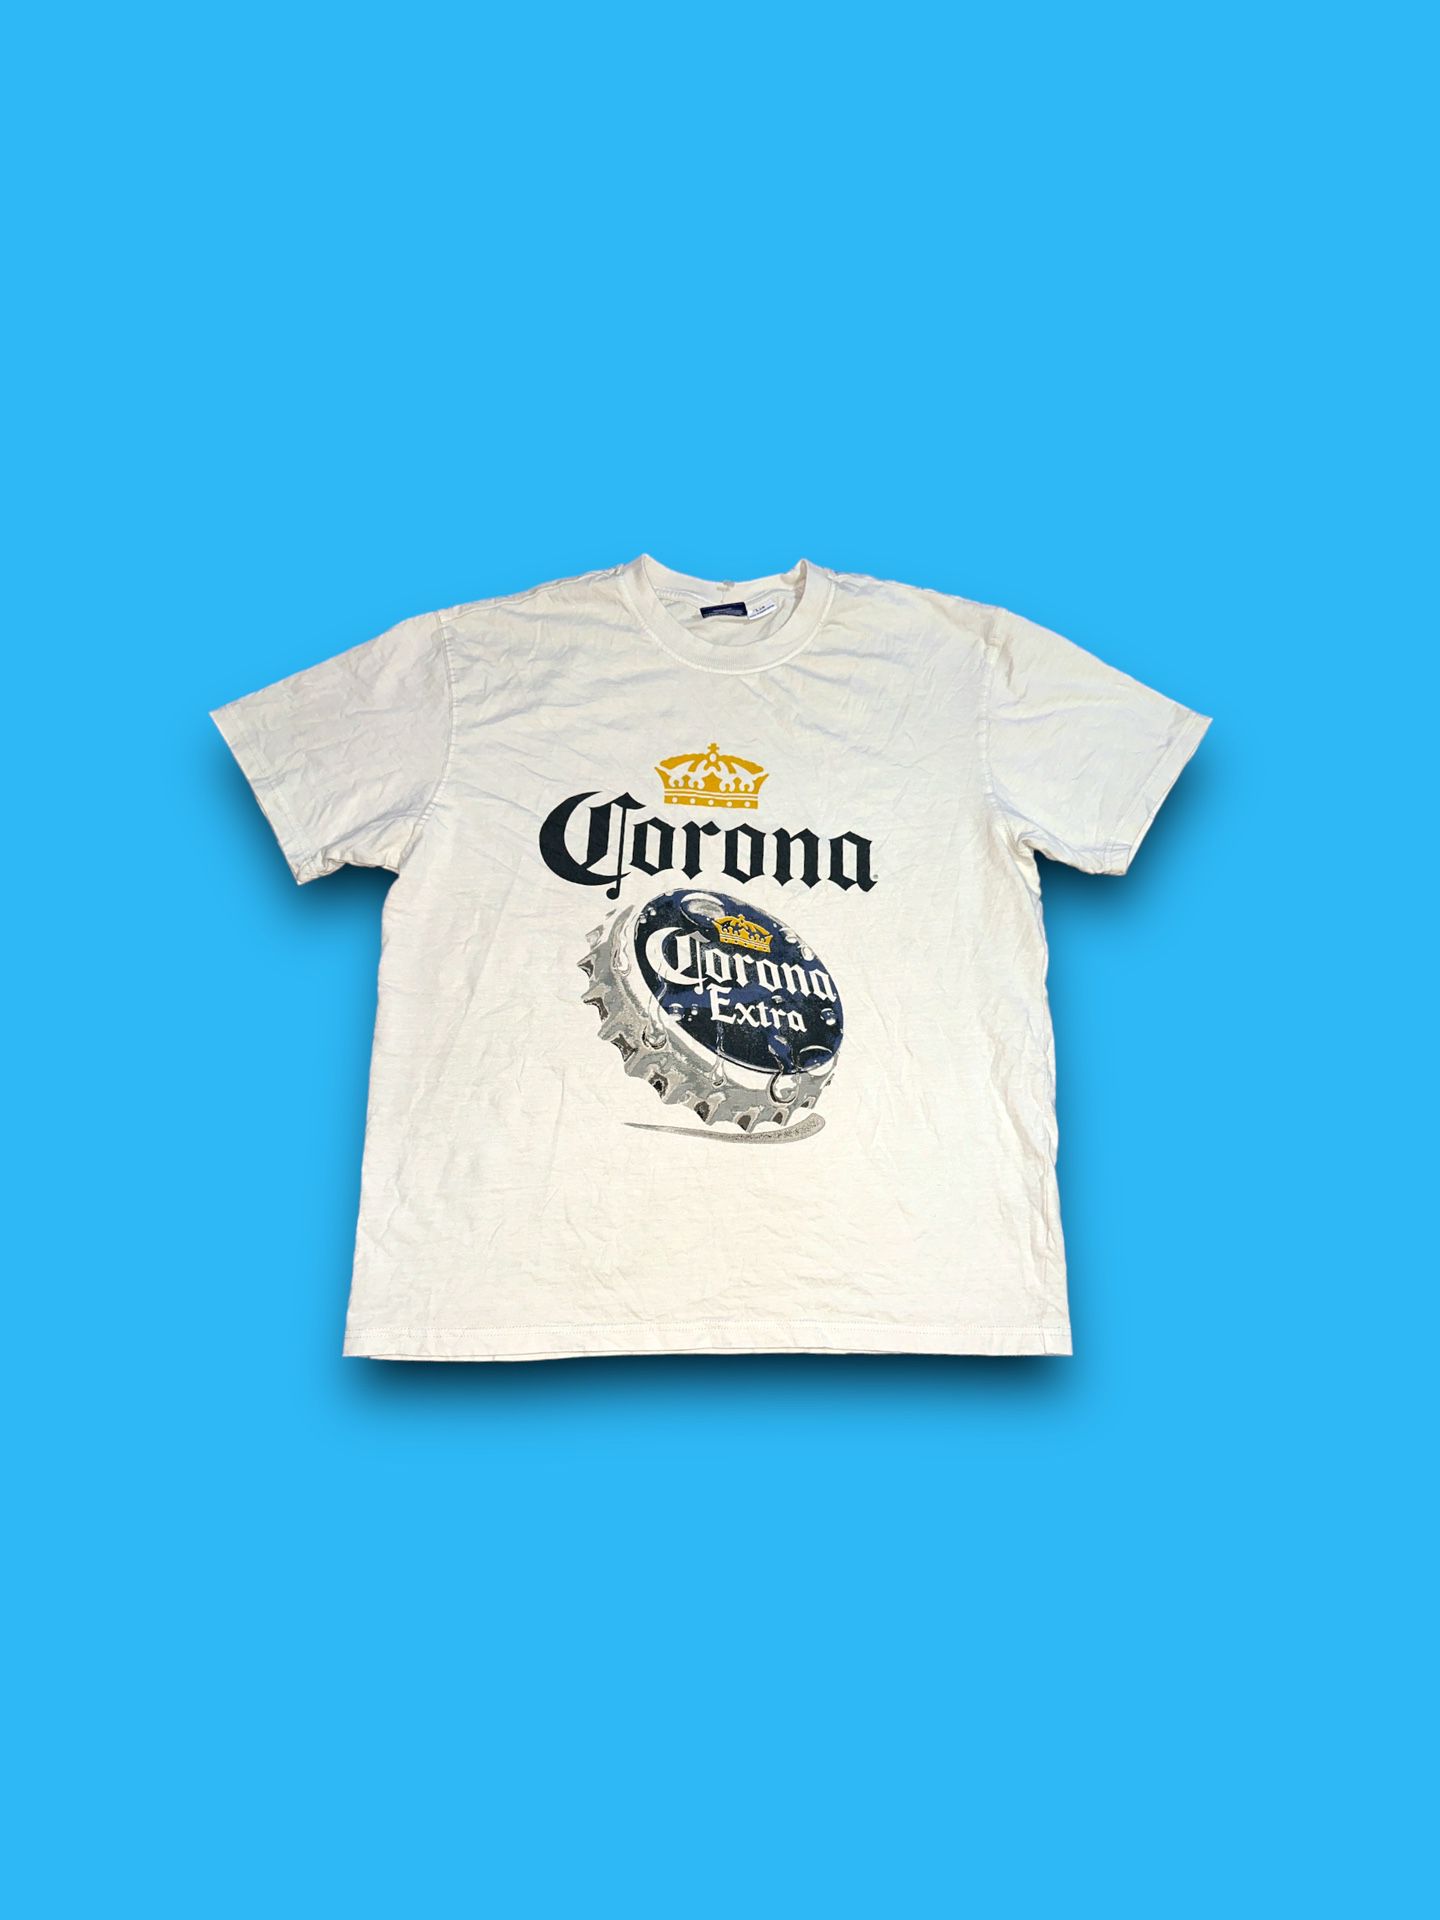 Vintage corona extra promo t-shirt 